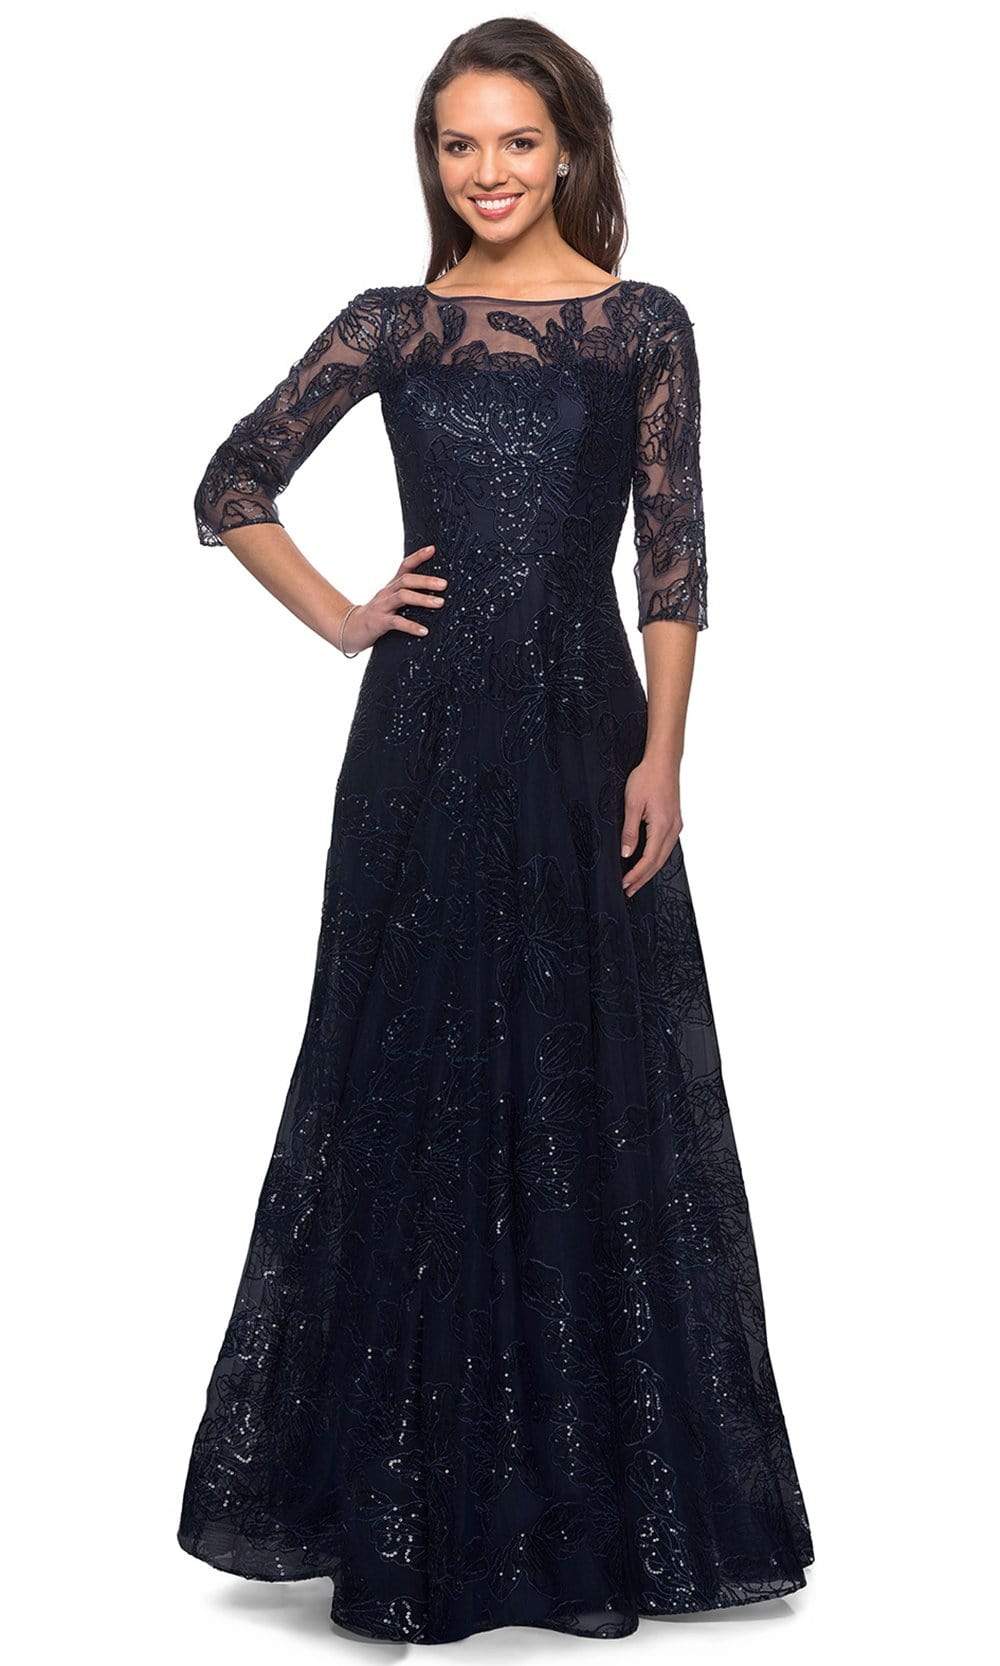 Image of La Femme - 27942 Quarter Sleeve Sequined Lace A-Line Dress